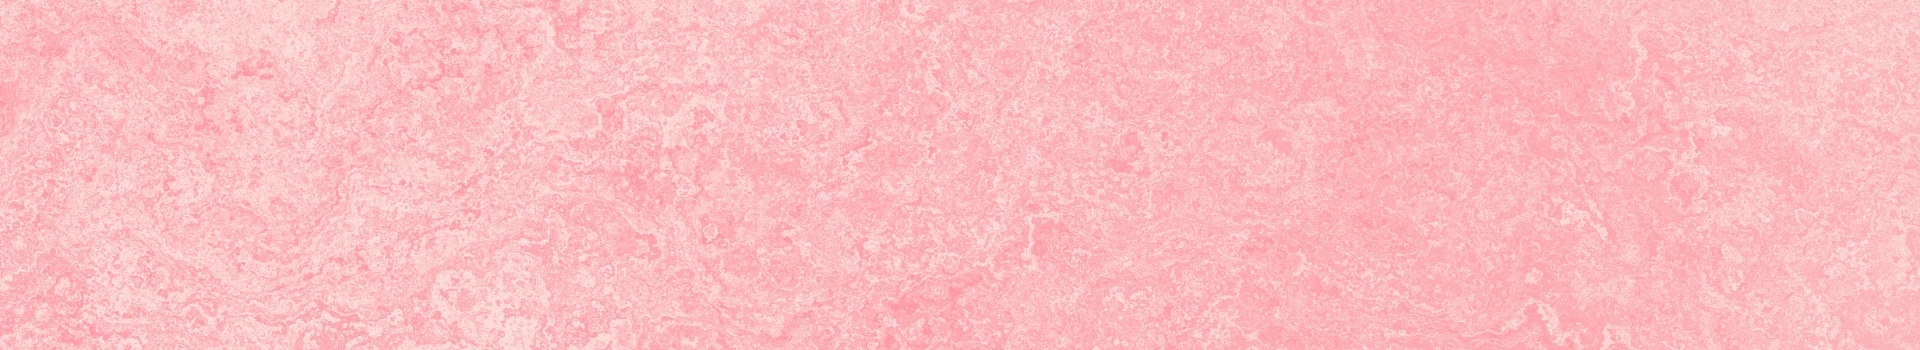 różowa tekstura